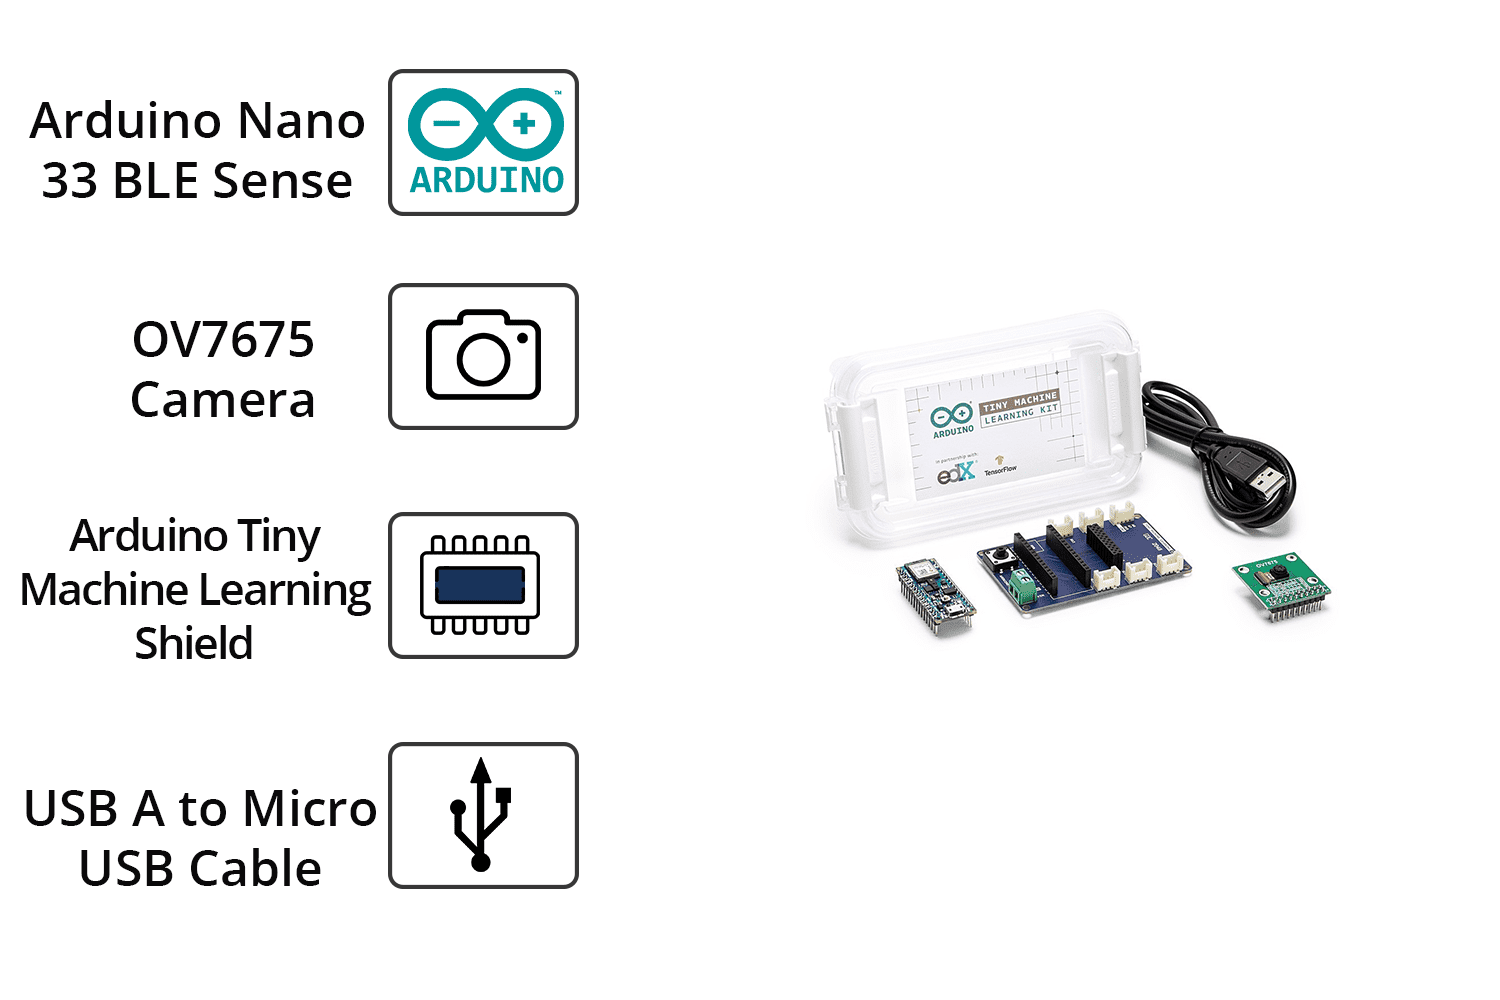 Arduino Uno Shield Based Development Diy Kit, Nano 33 IoT at Rs